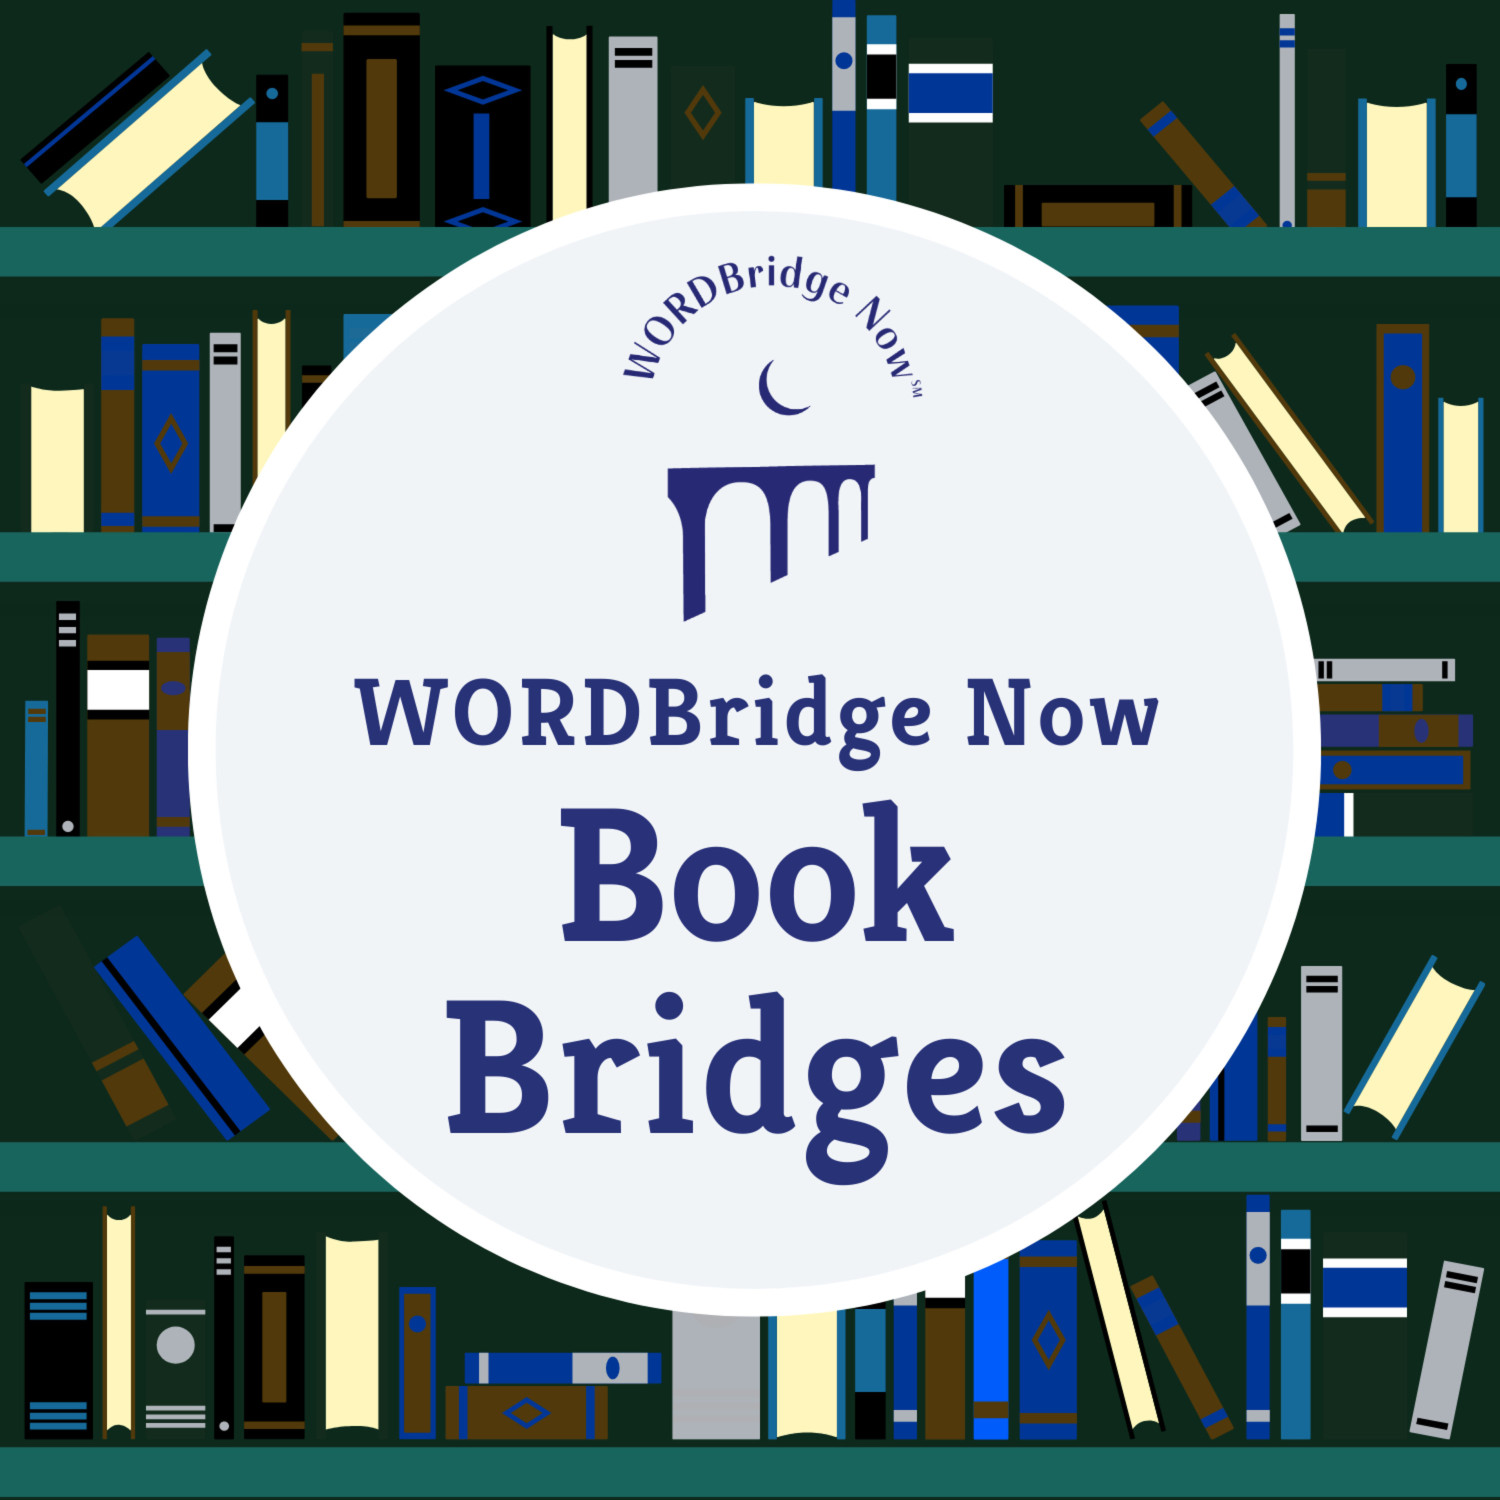 Book Bridges Podcast from WORDBridge Now!